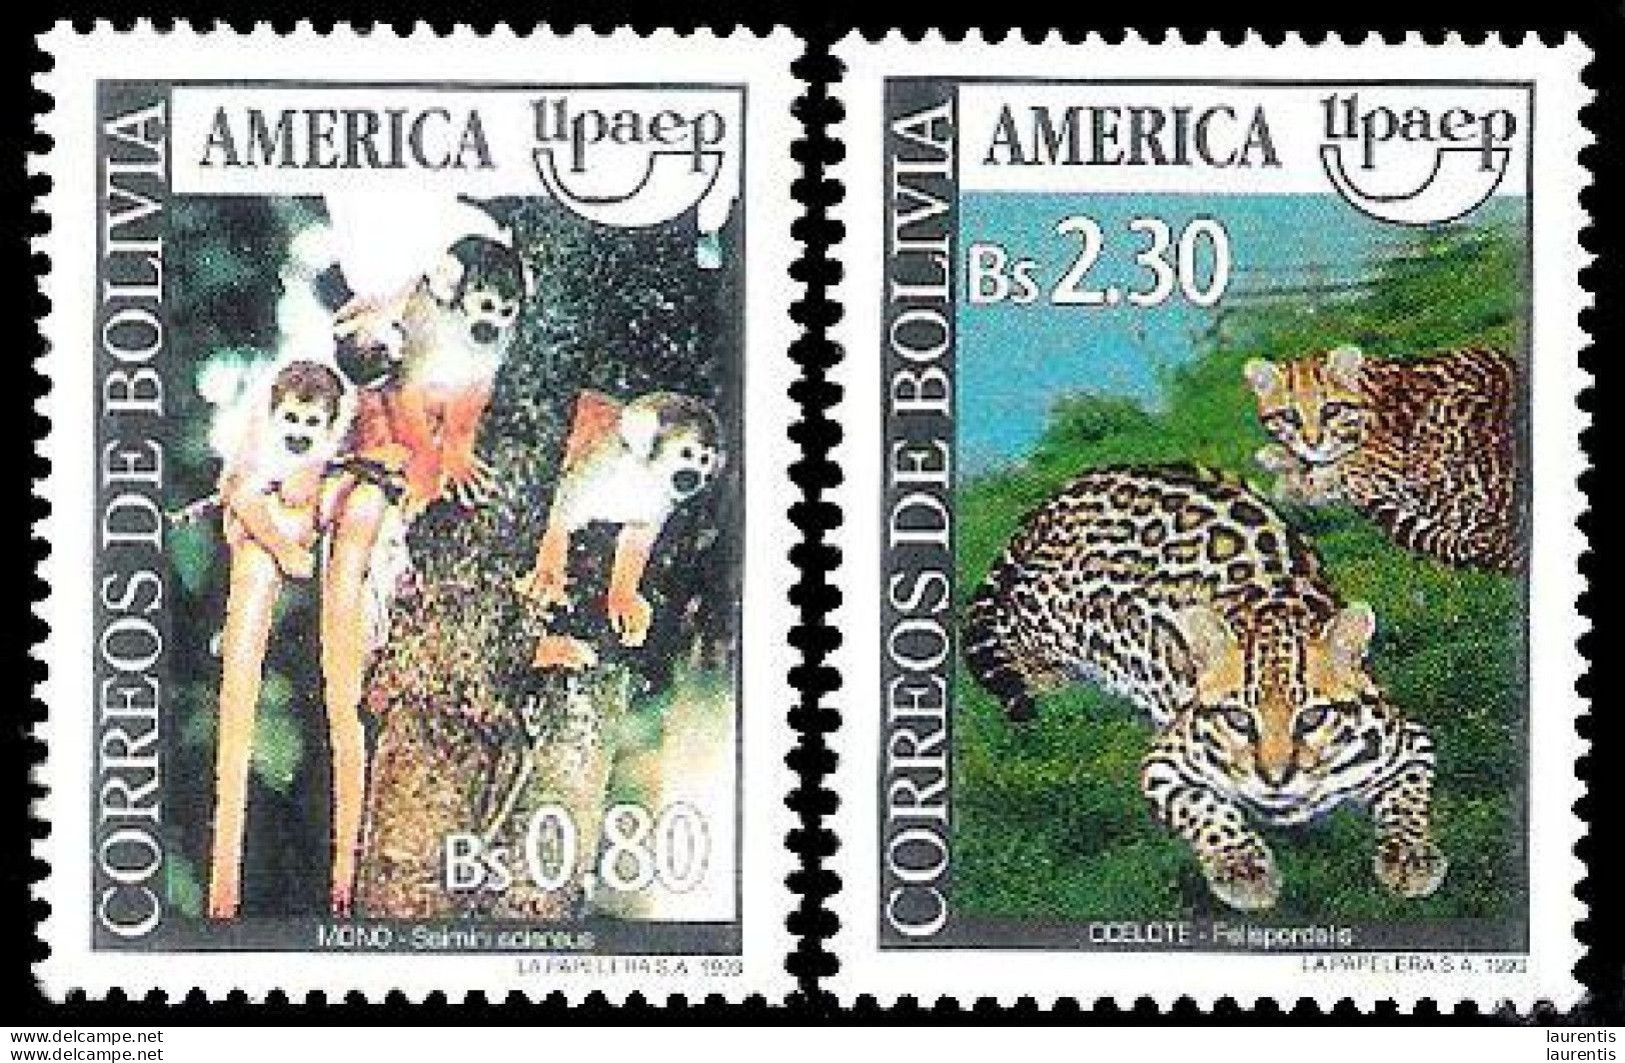 18324. Felins - UPAEP - Bolivia Yv 836-37 - MNH - 1,75 (7) - Big Cats (cats Of Prey)